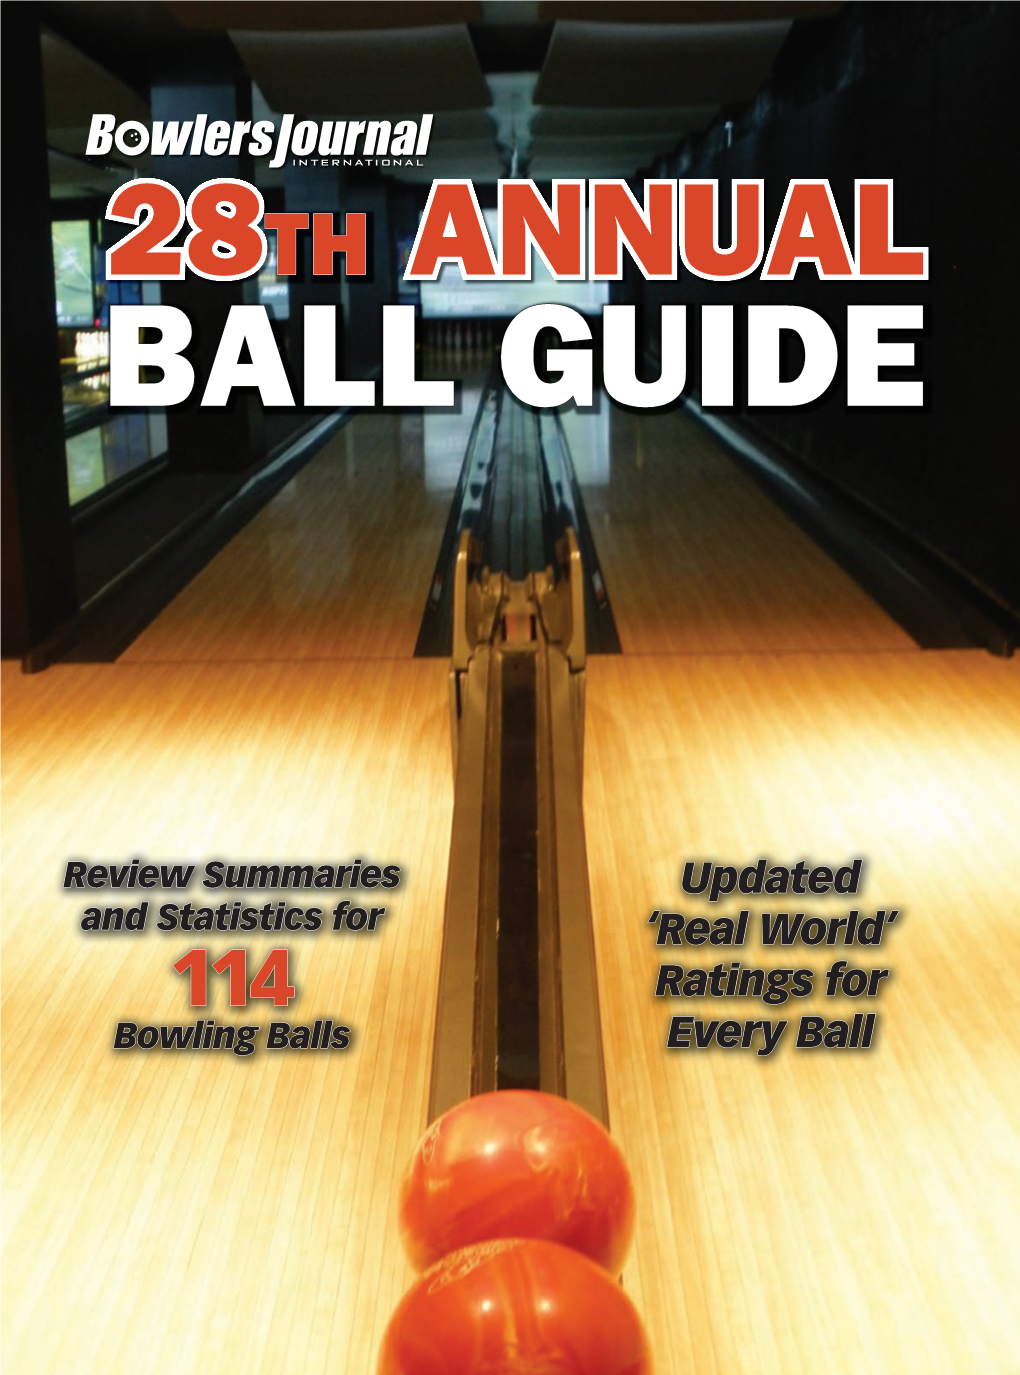 Ball Guide 2012